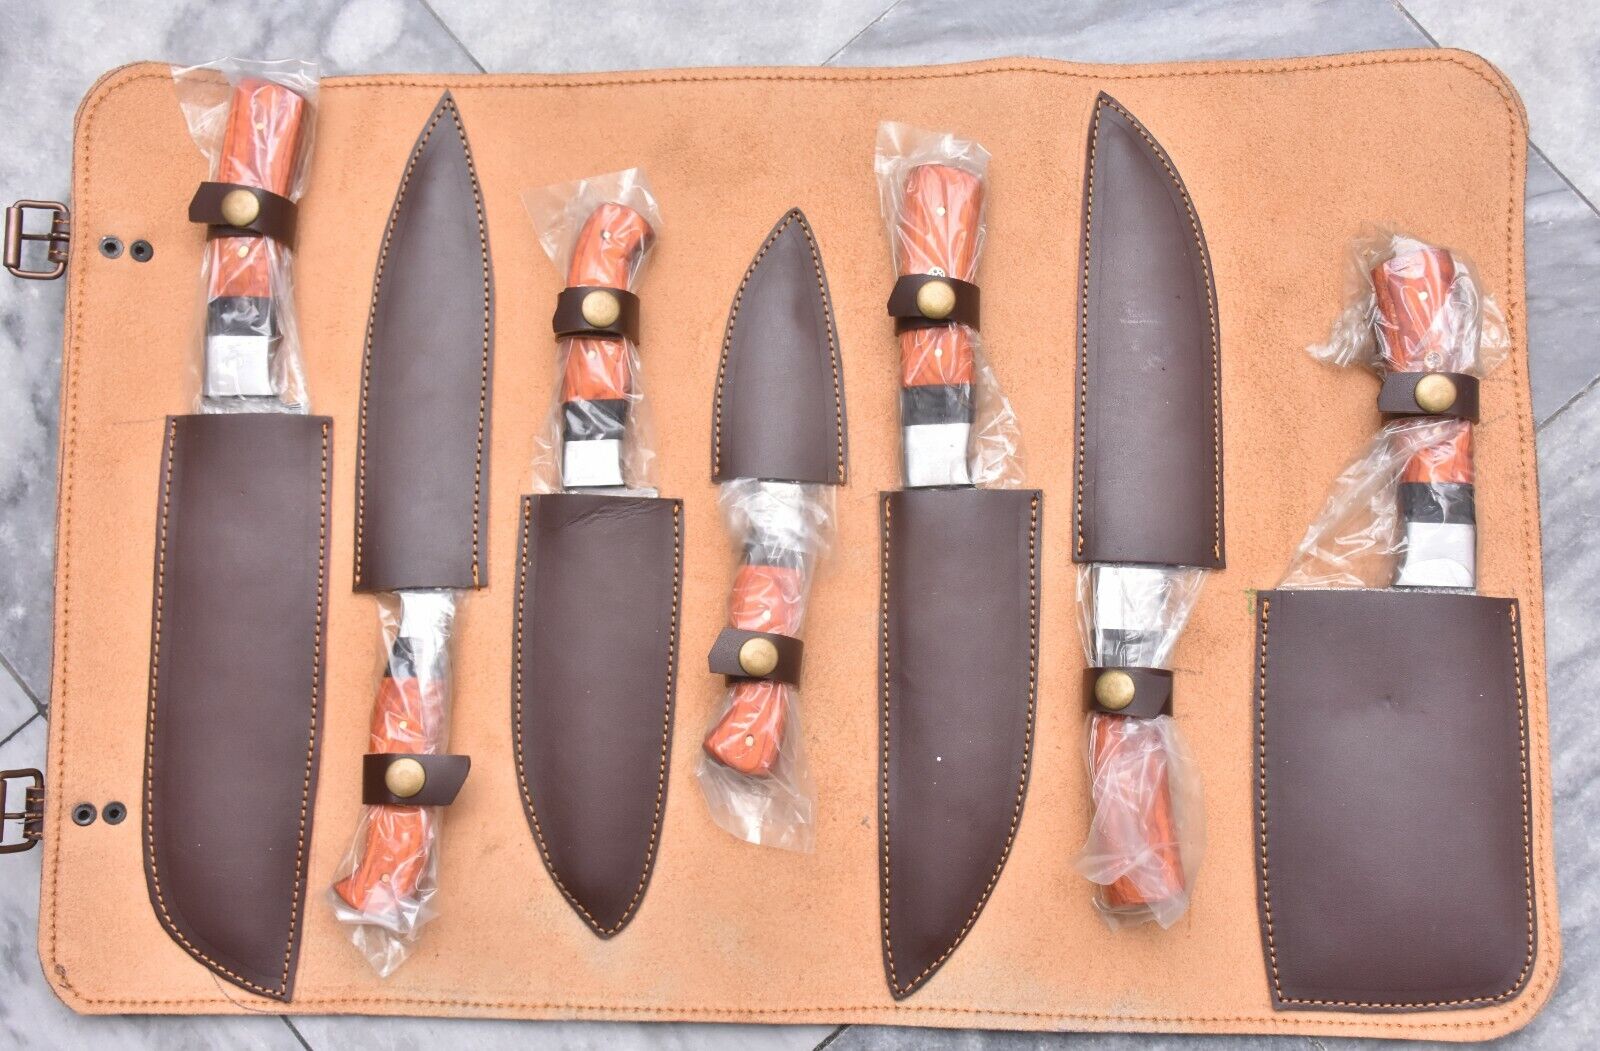 BEAUTIFUL HANDMADE DAMASCUS STEEL CHEF KNIFE SET OF 7 PIECES WITH GENUINE SHEATH